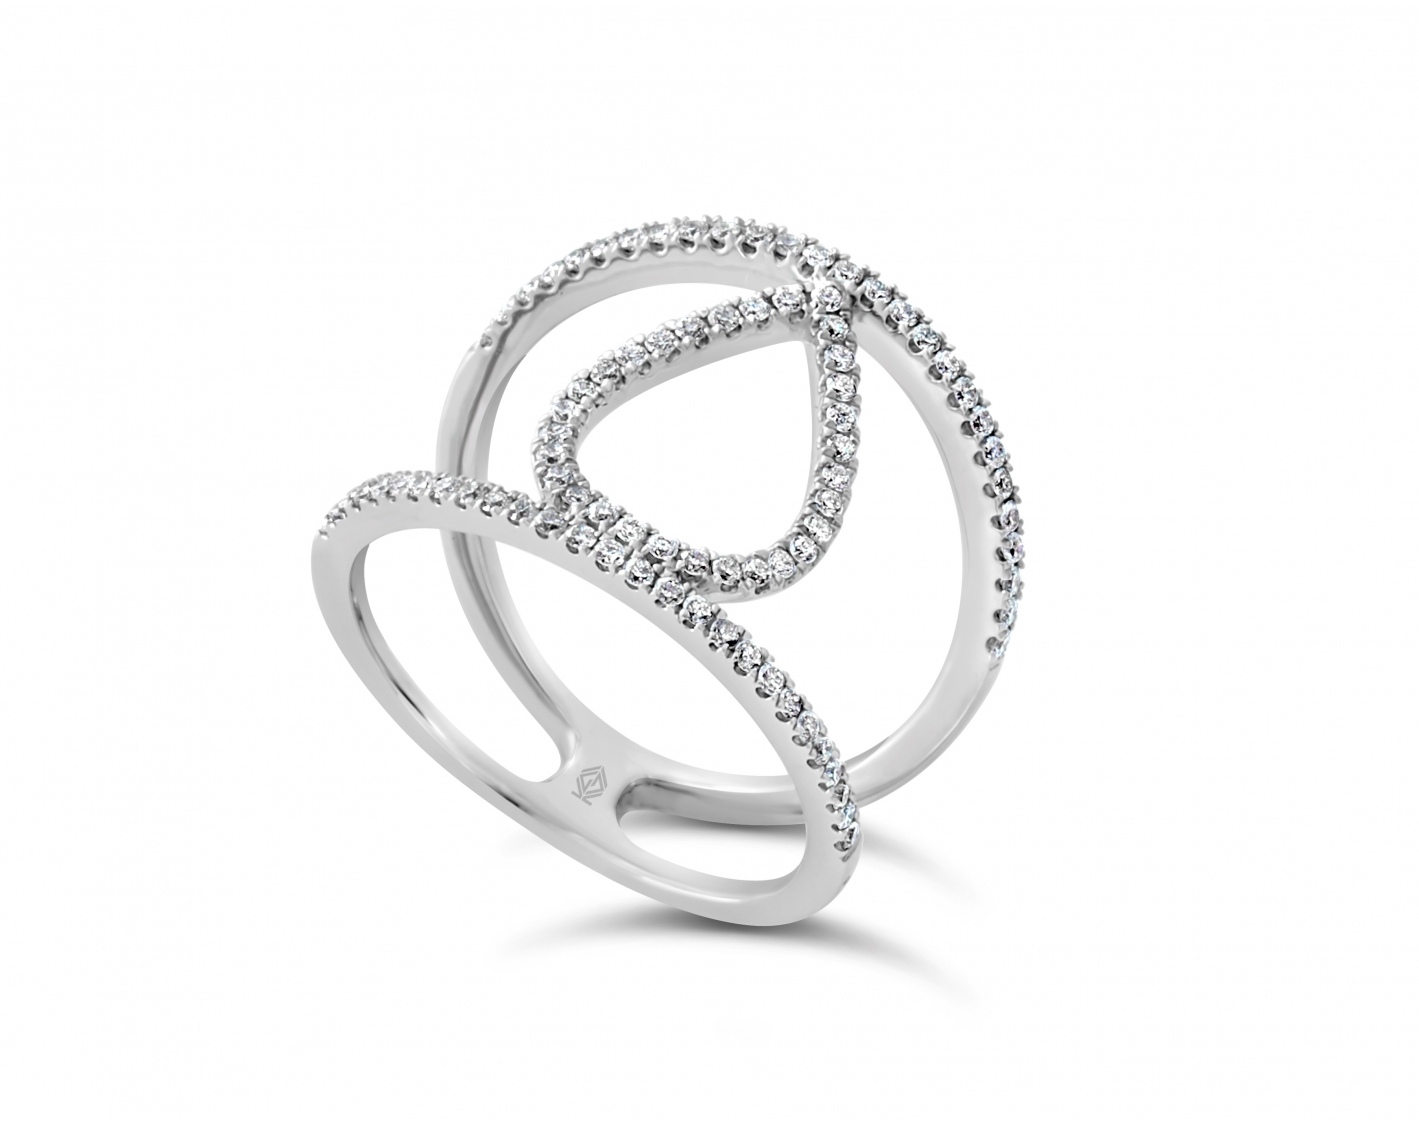 18k rose gold pear-fashion round shaped diamond ring Photos & images